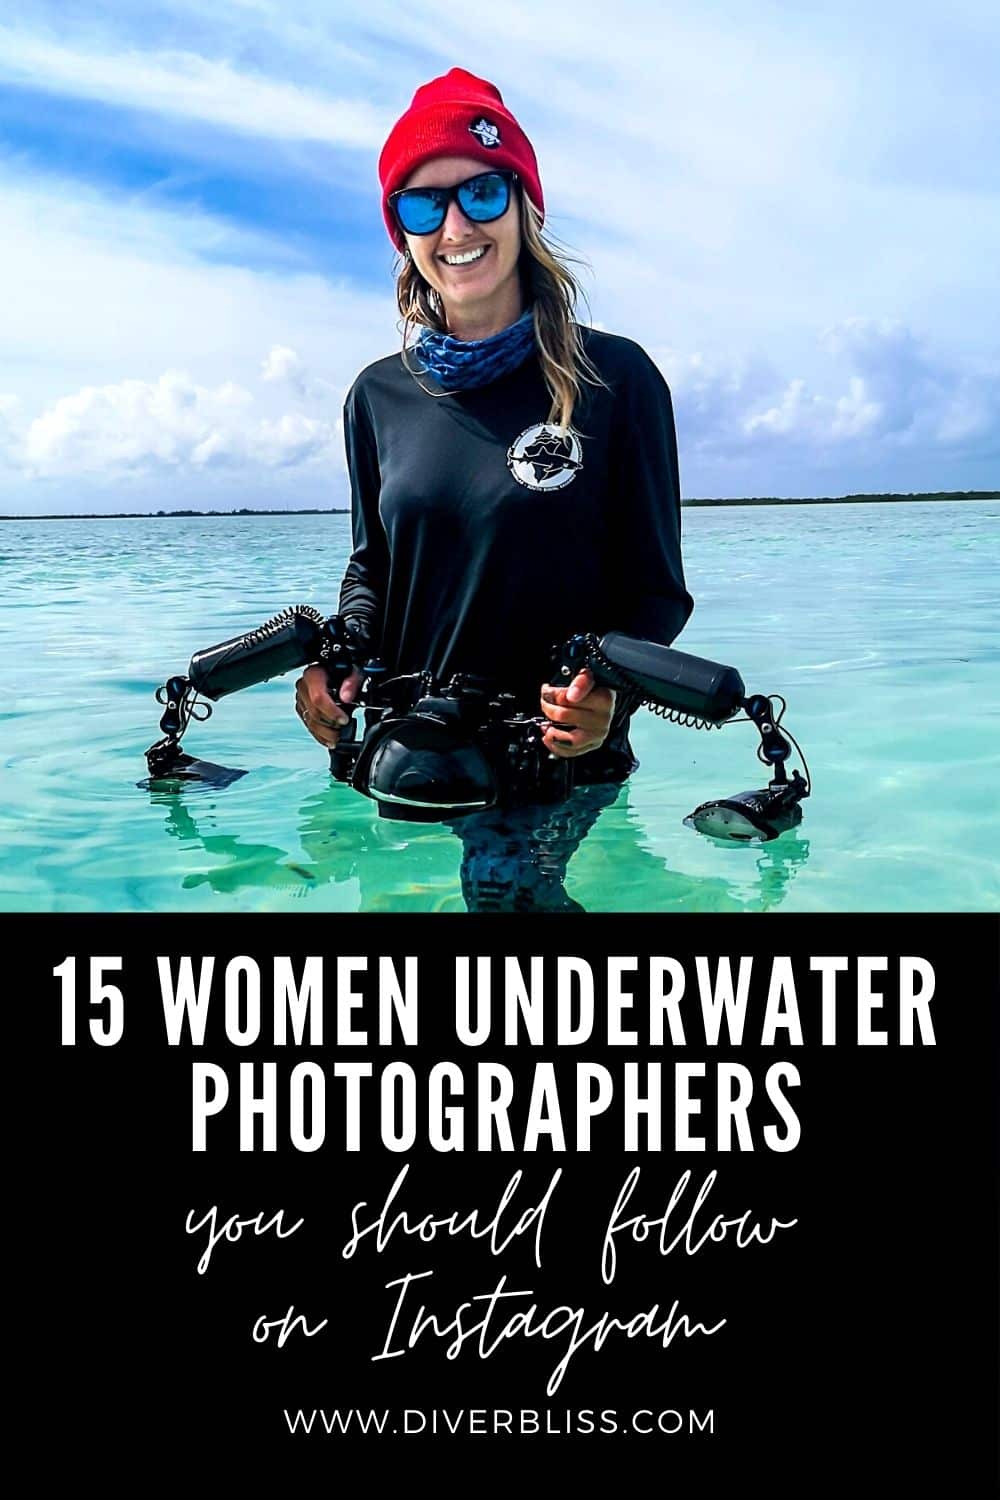 15 women underwater photographers you should follow on Instagram